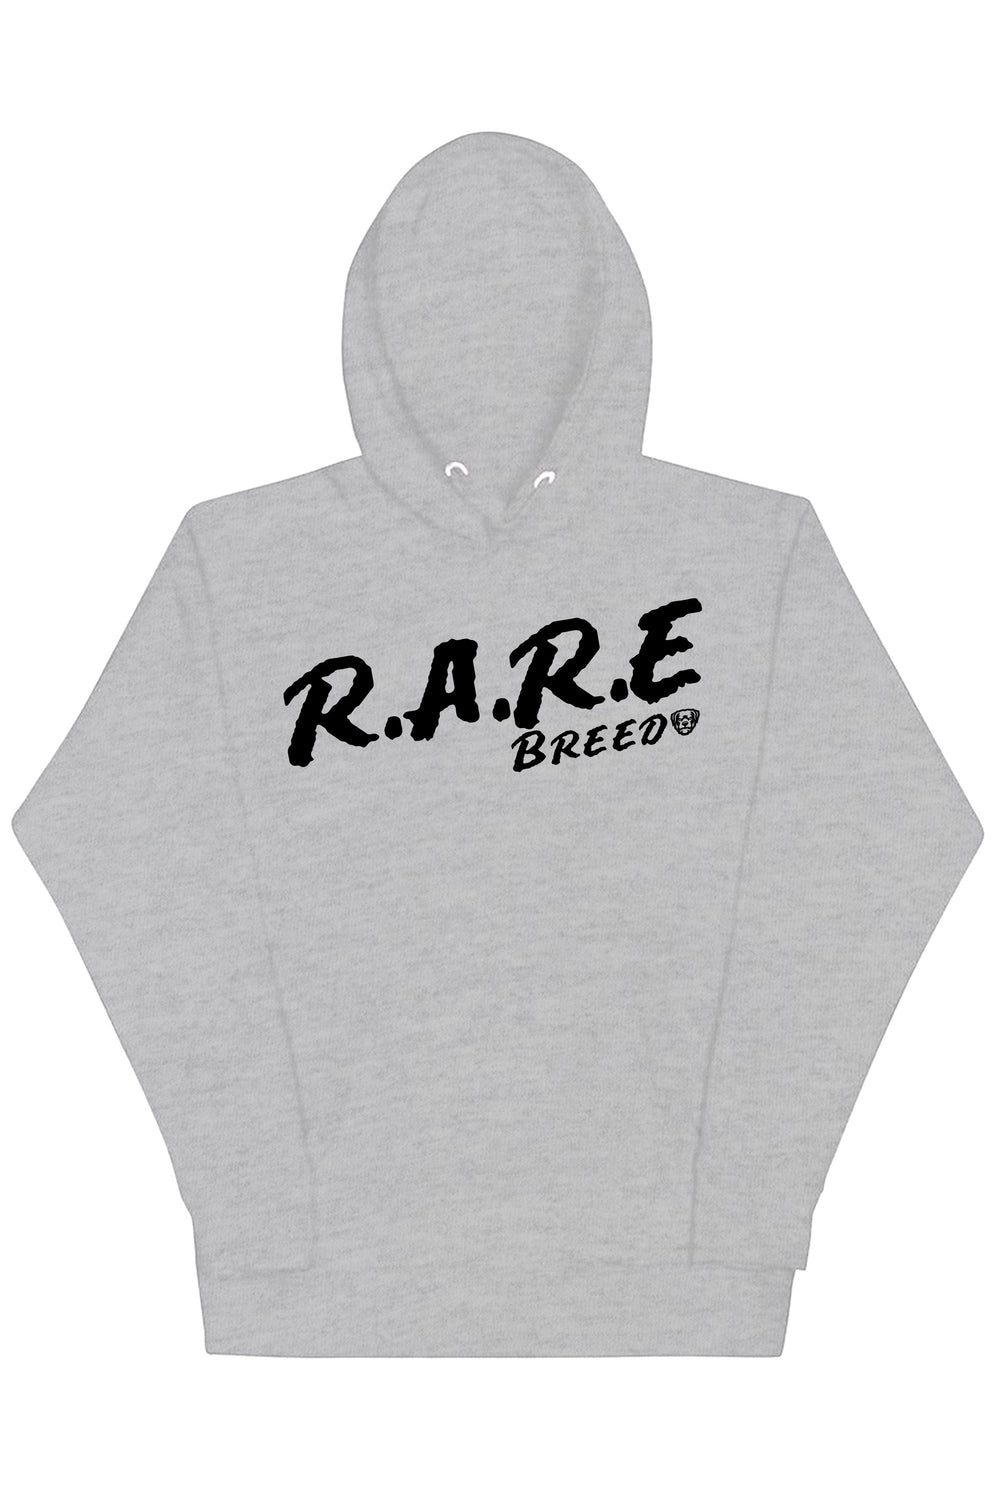 Rare Breed Hoodie (Black Logo) - Zamage